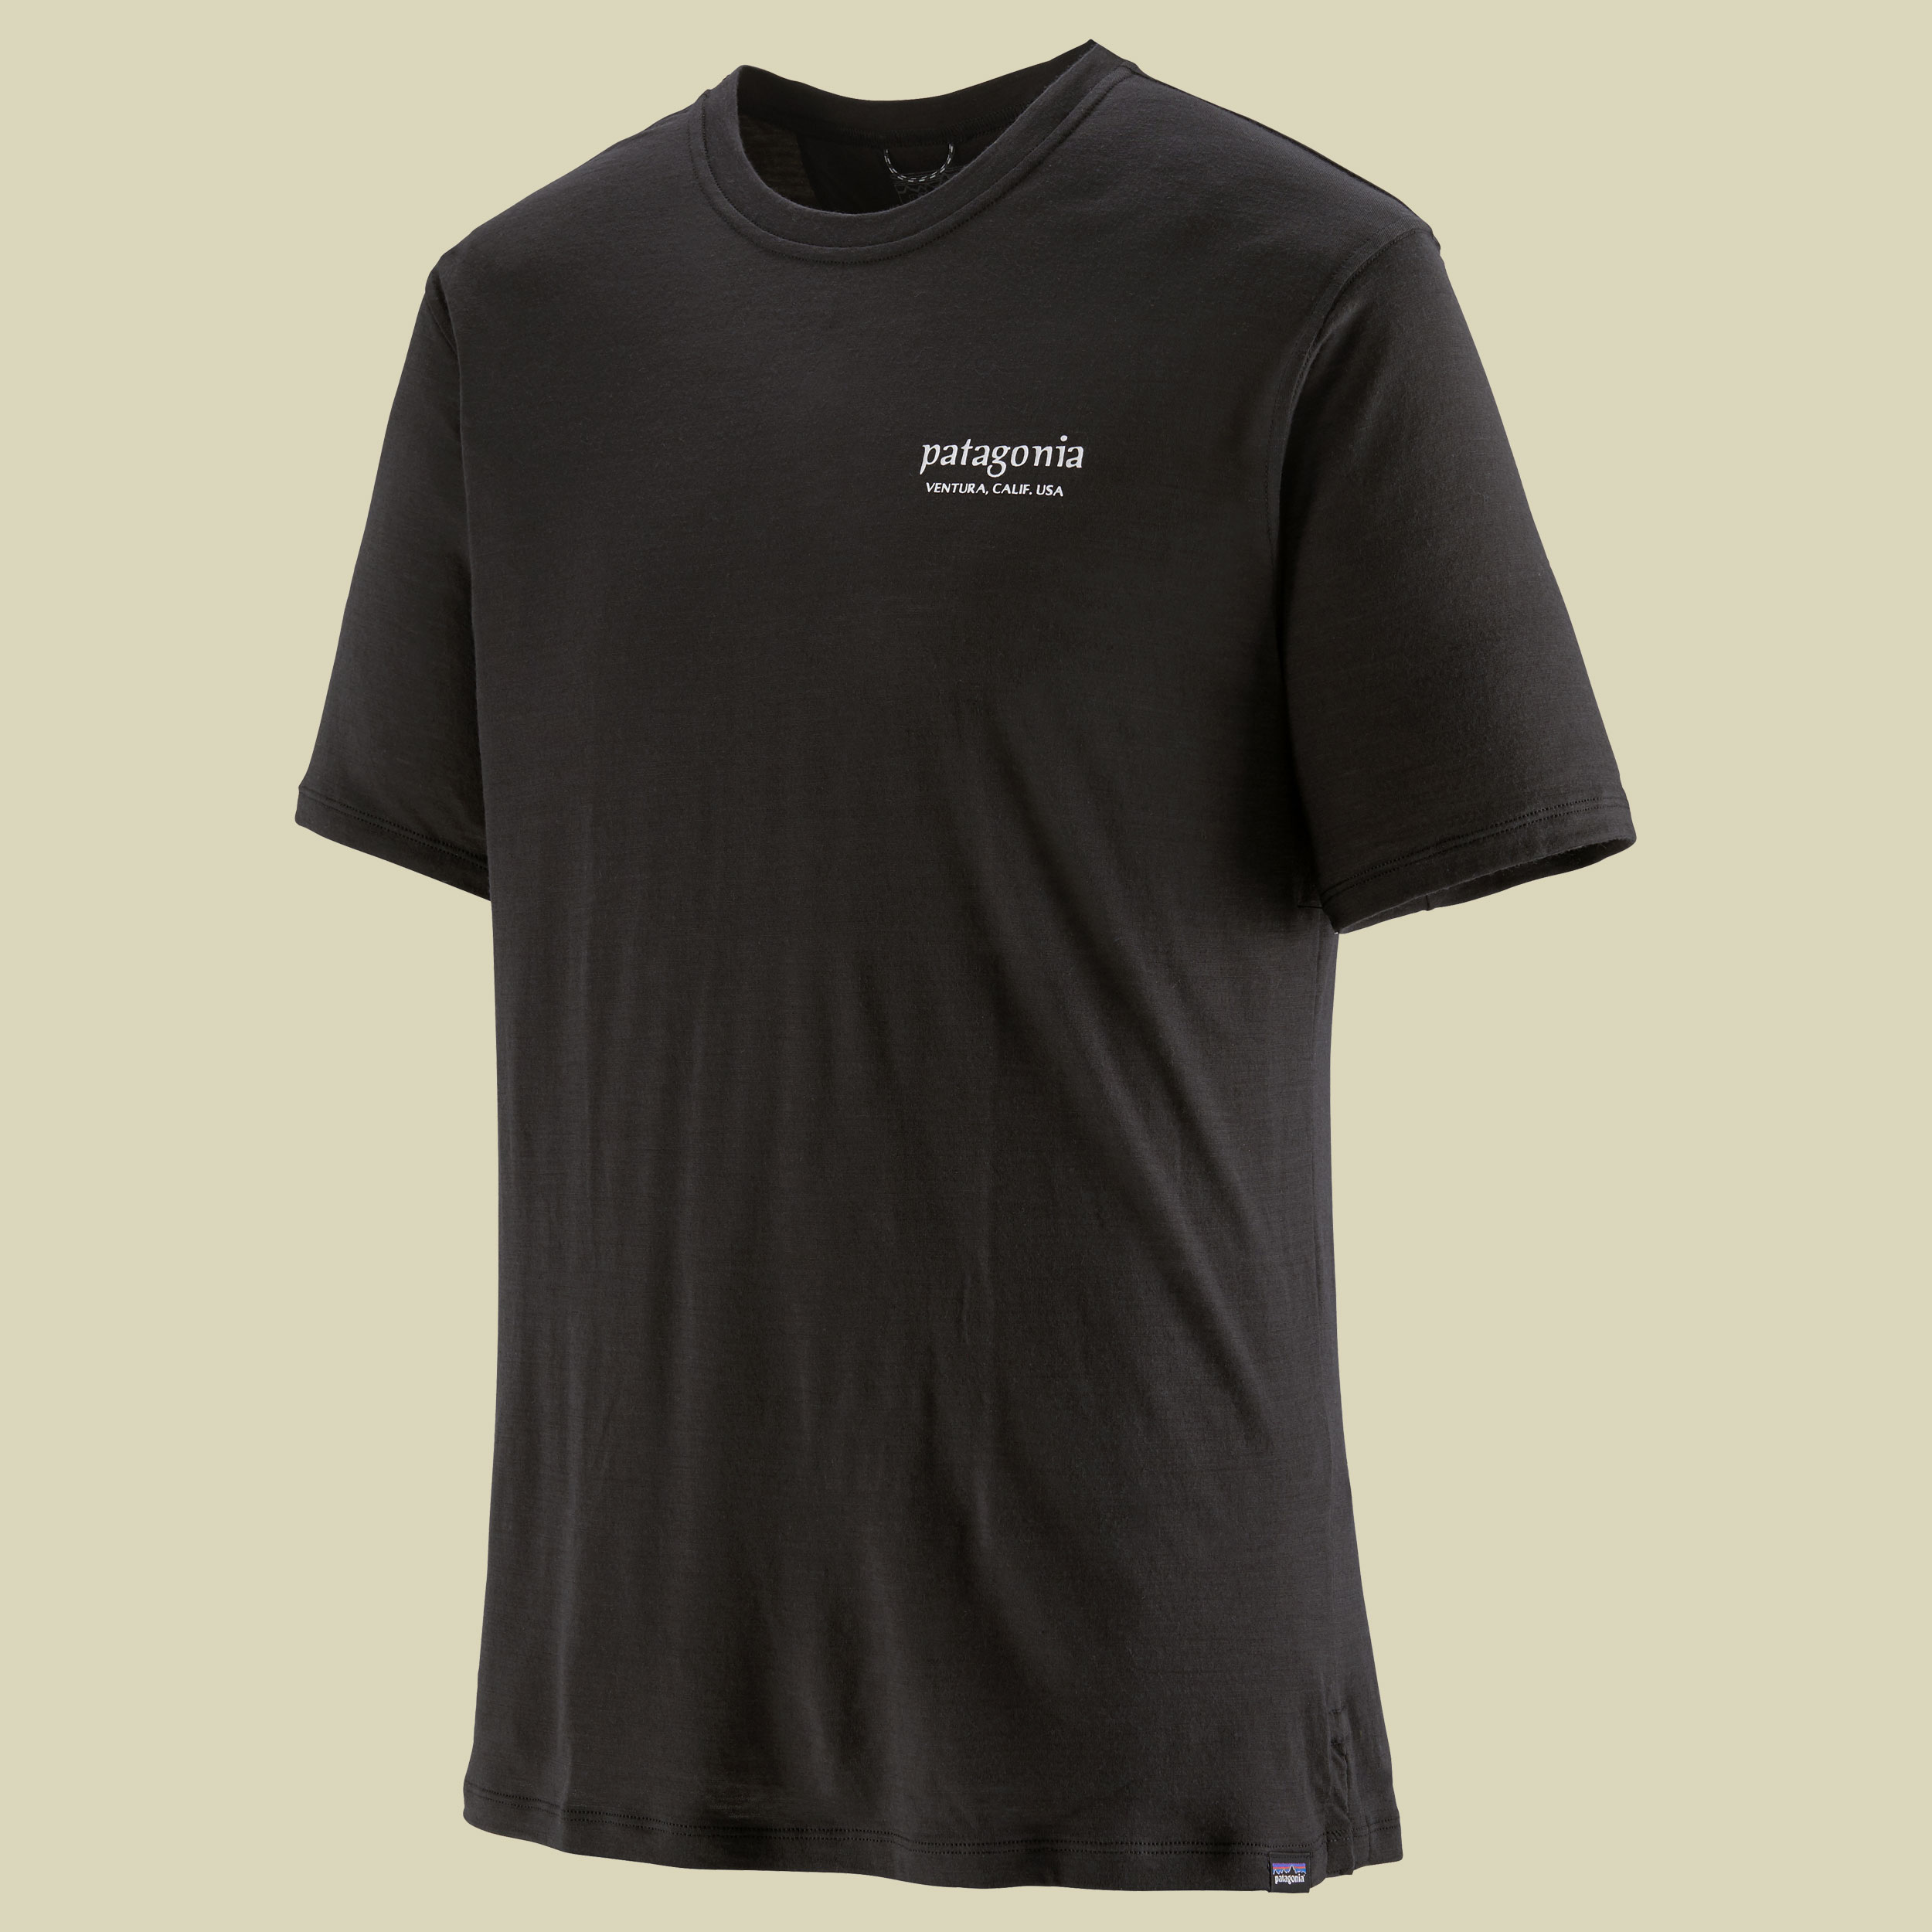 Cap Cool Merino Blend Graphic Shirt Men S schwarz - heritage header:black